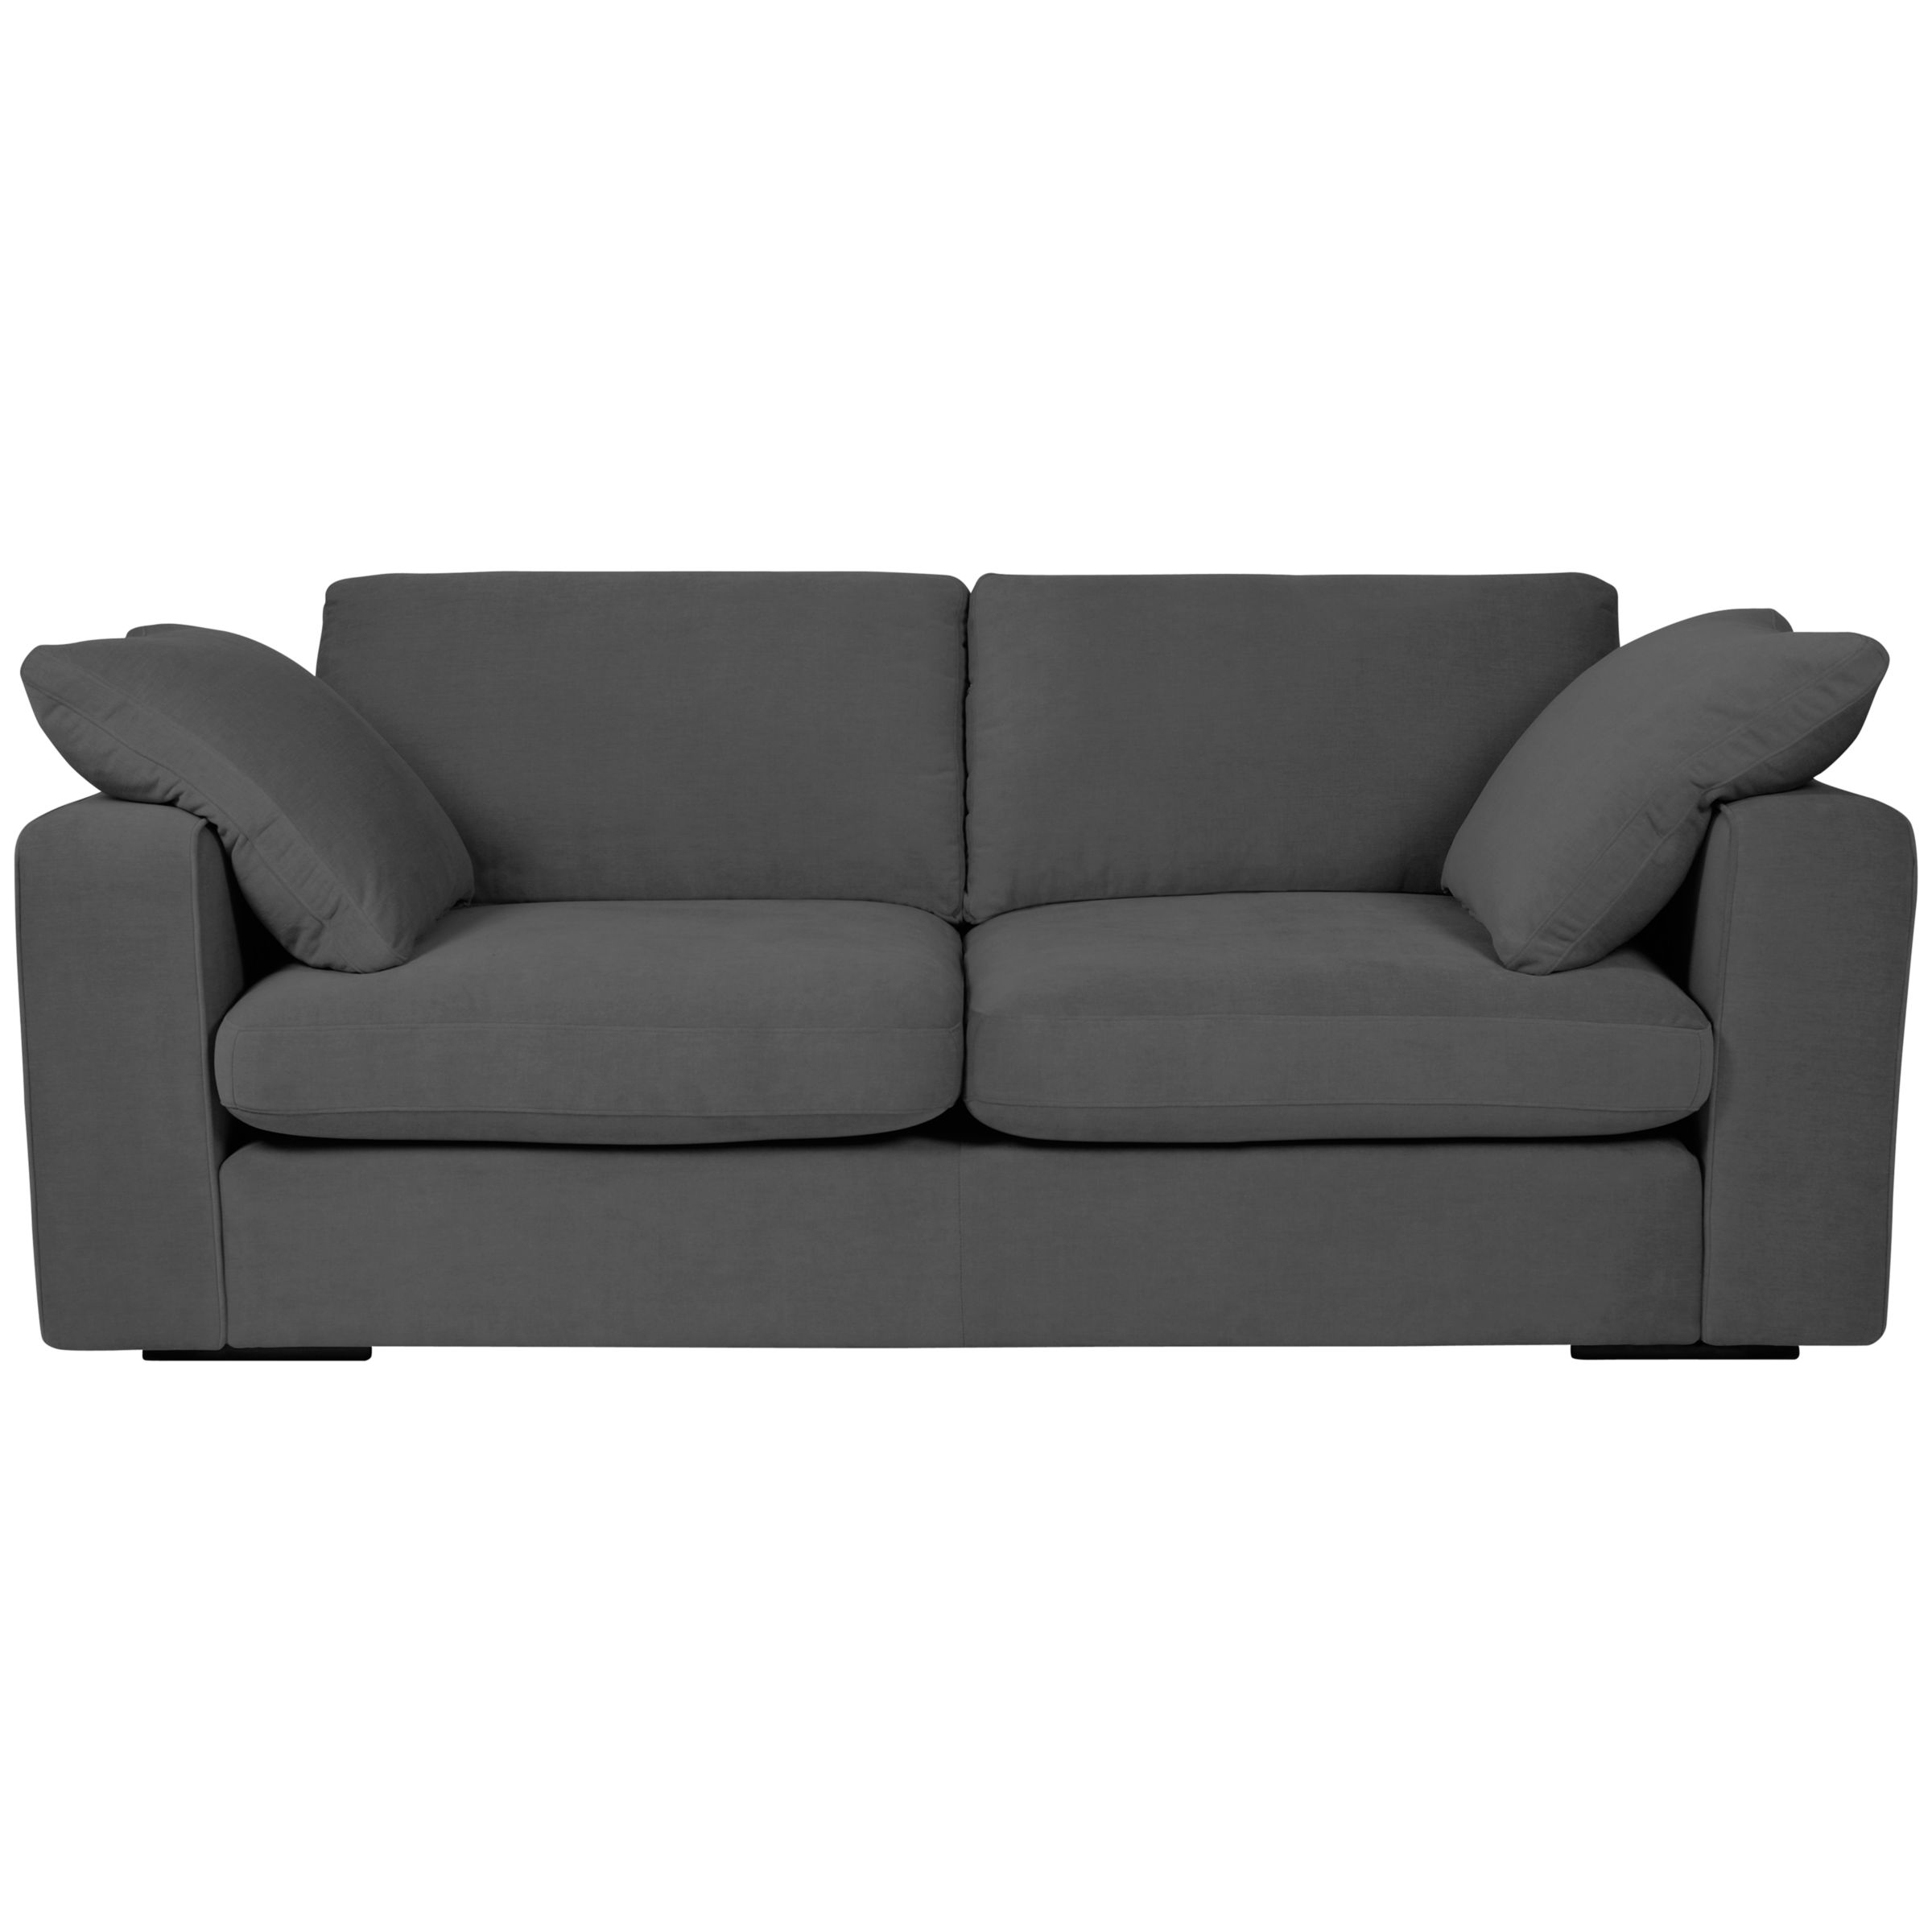 John Lewis Jones Options 2 Square Arm Large Sofa, Shadow, width 208cm